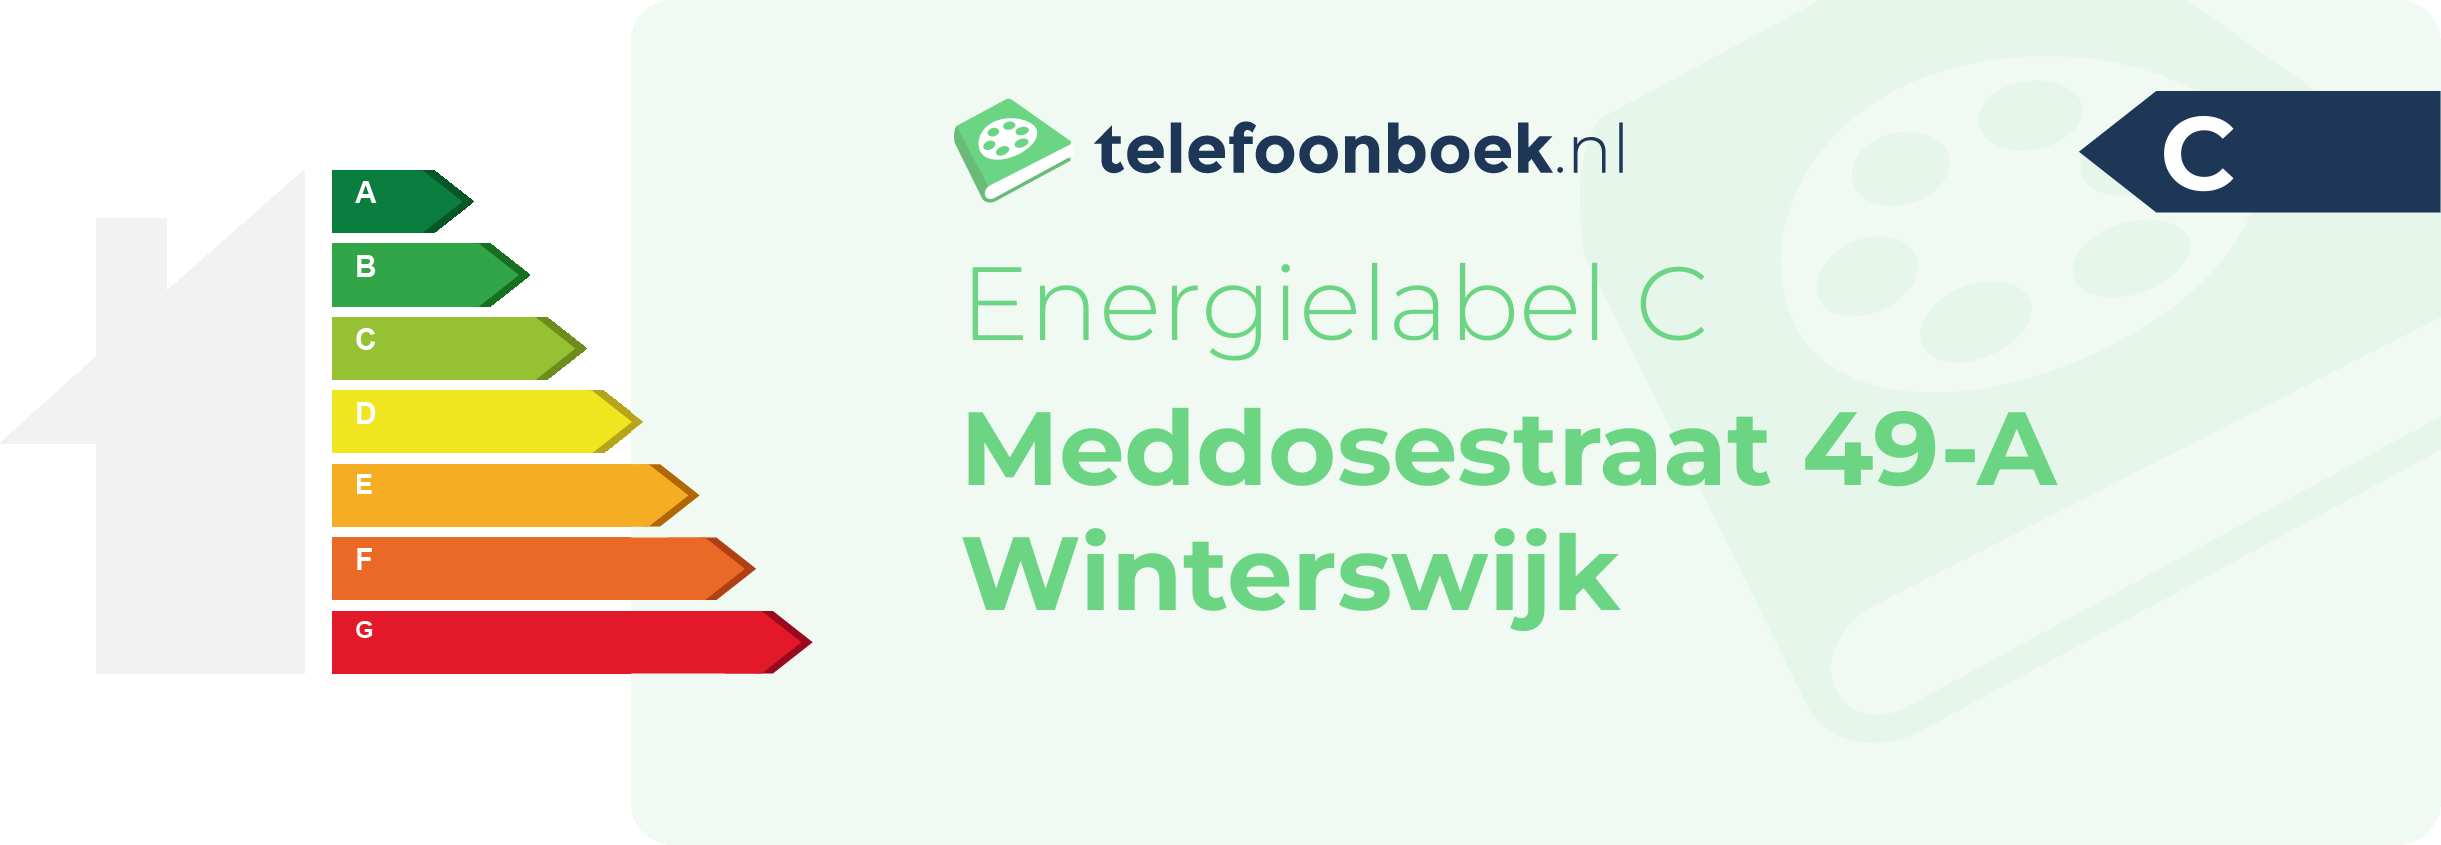 Energielabel Meddosestraat 49-A Winterswijk